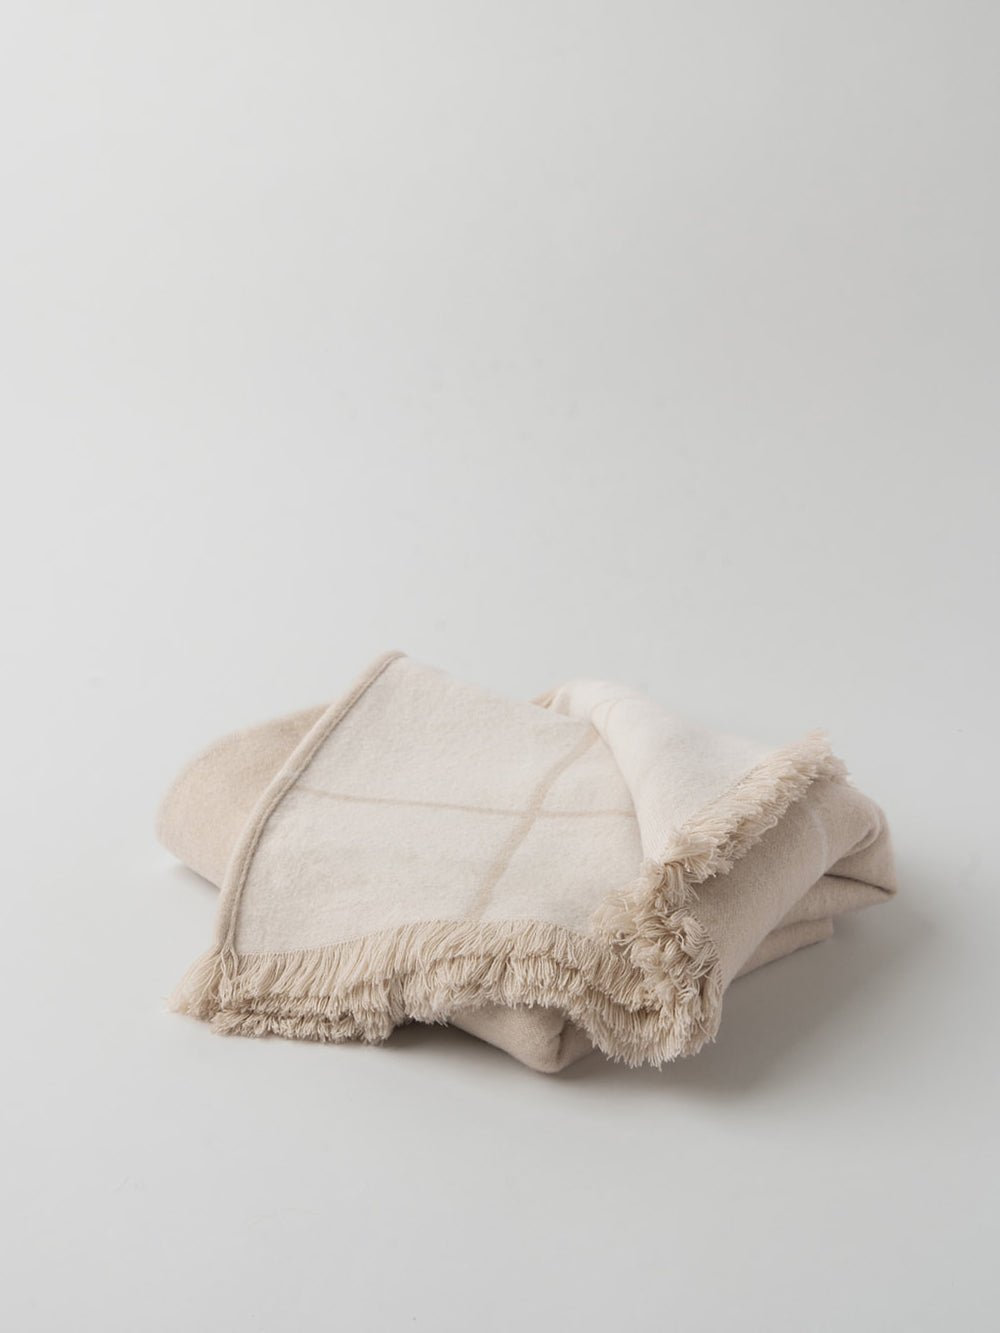 Beige windowpane blanket half folded showing tasseled edge |Color:Beige/Creme